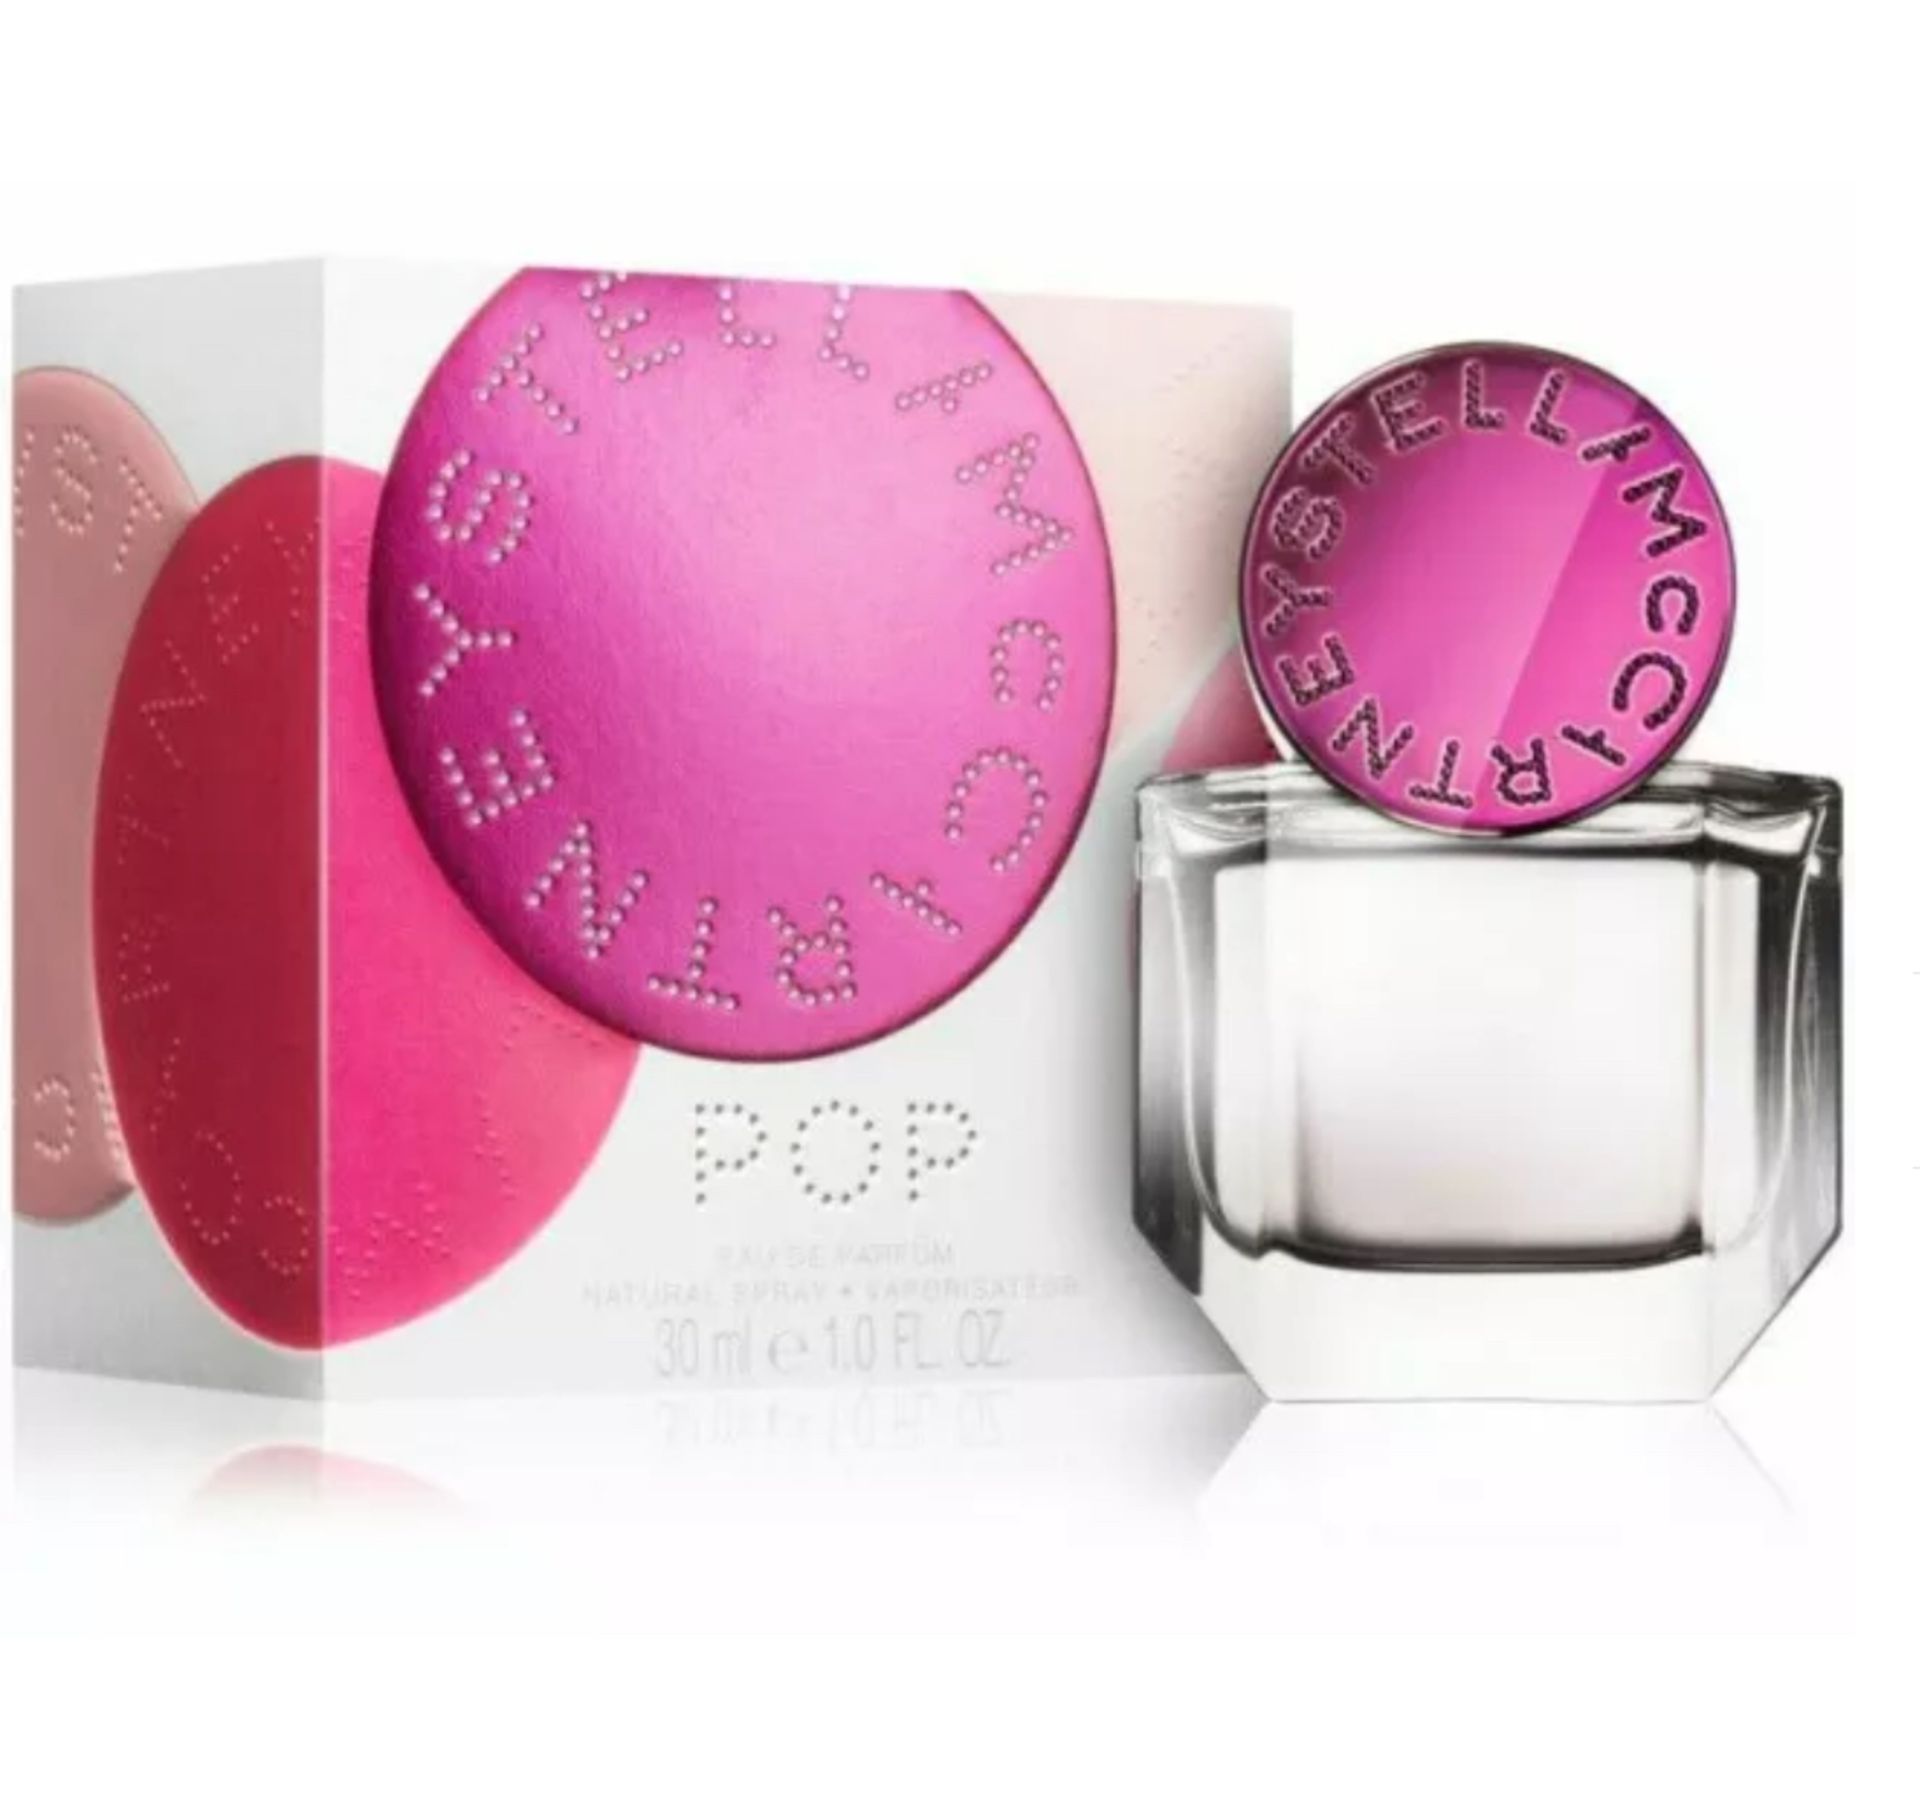 New Stella McCartney POP perfume 30ml